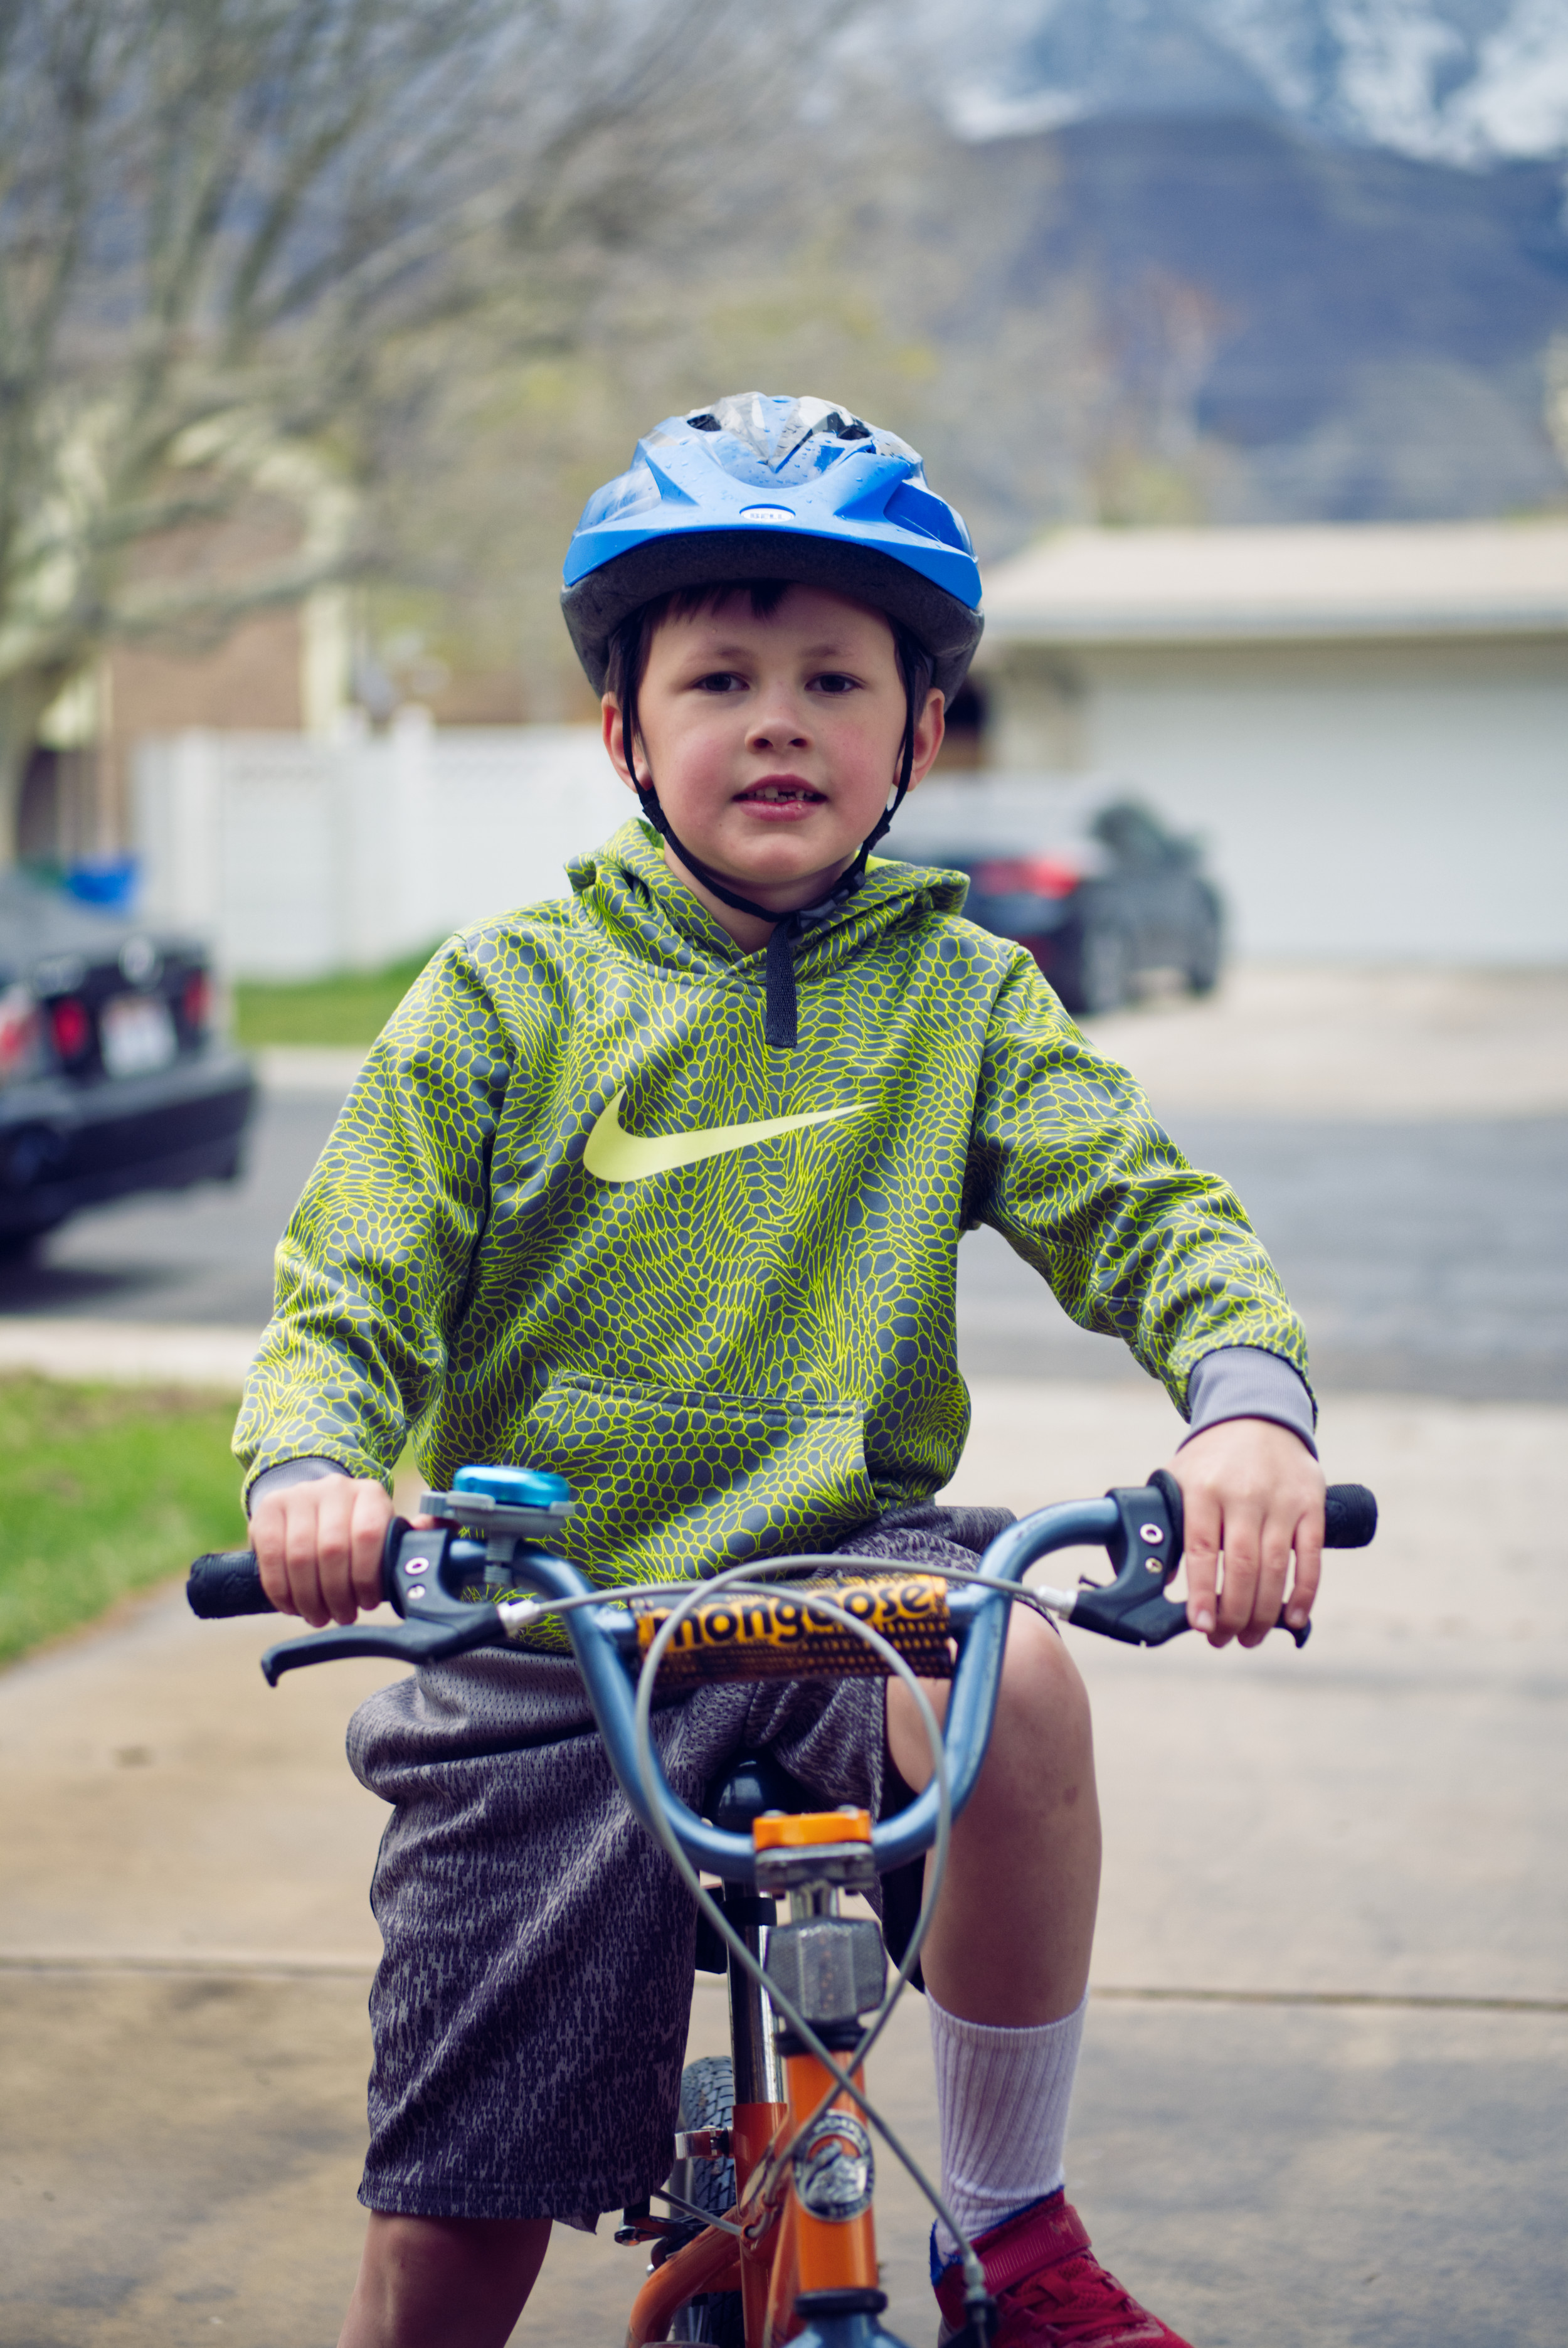 Emmett poses on his orange bike.